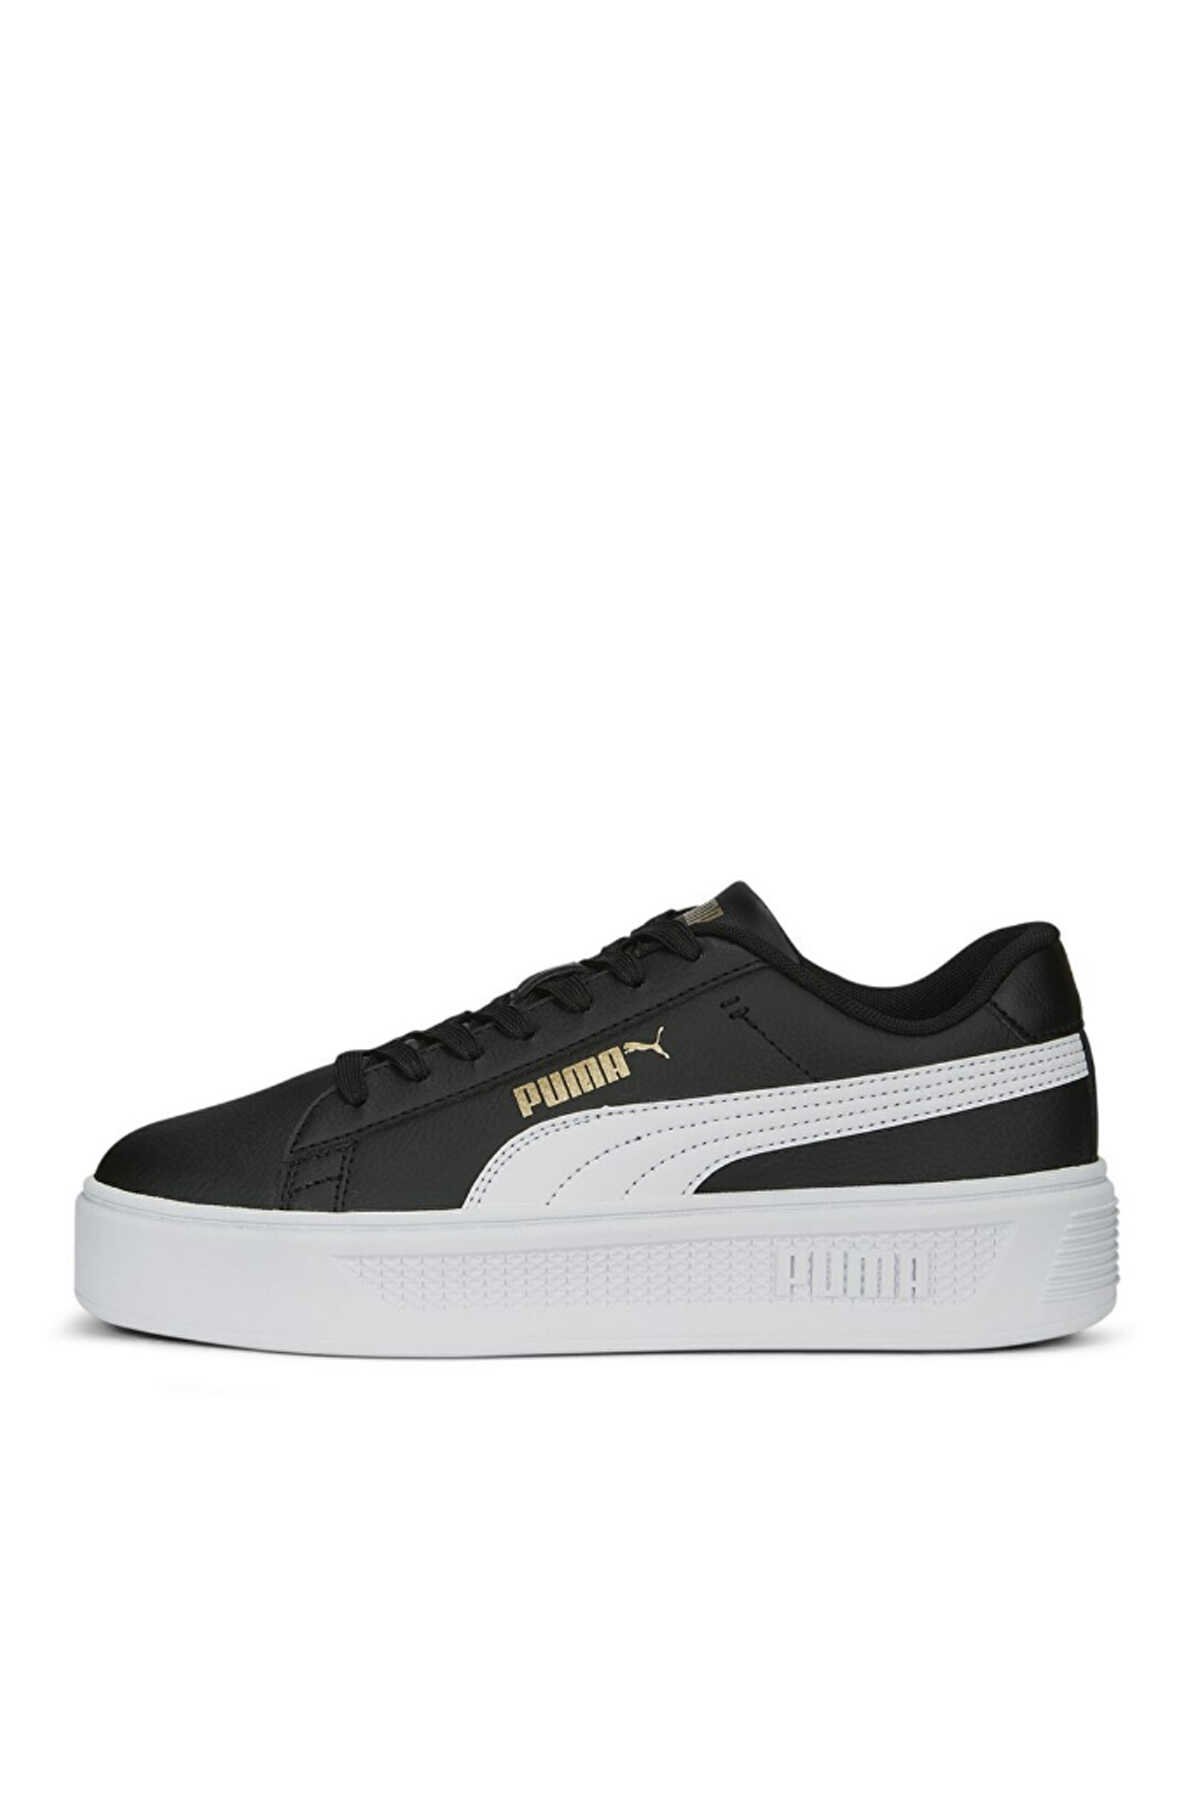 Puma - Puma Smash Platform Kadın Sneaker Ayakkabı Siyah / Beyaz